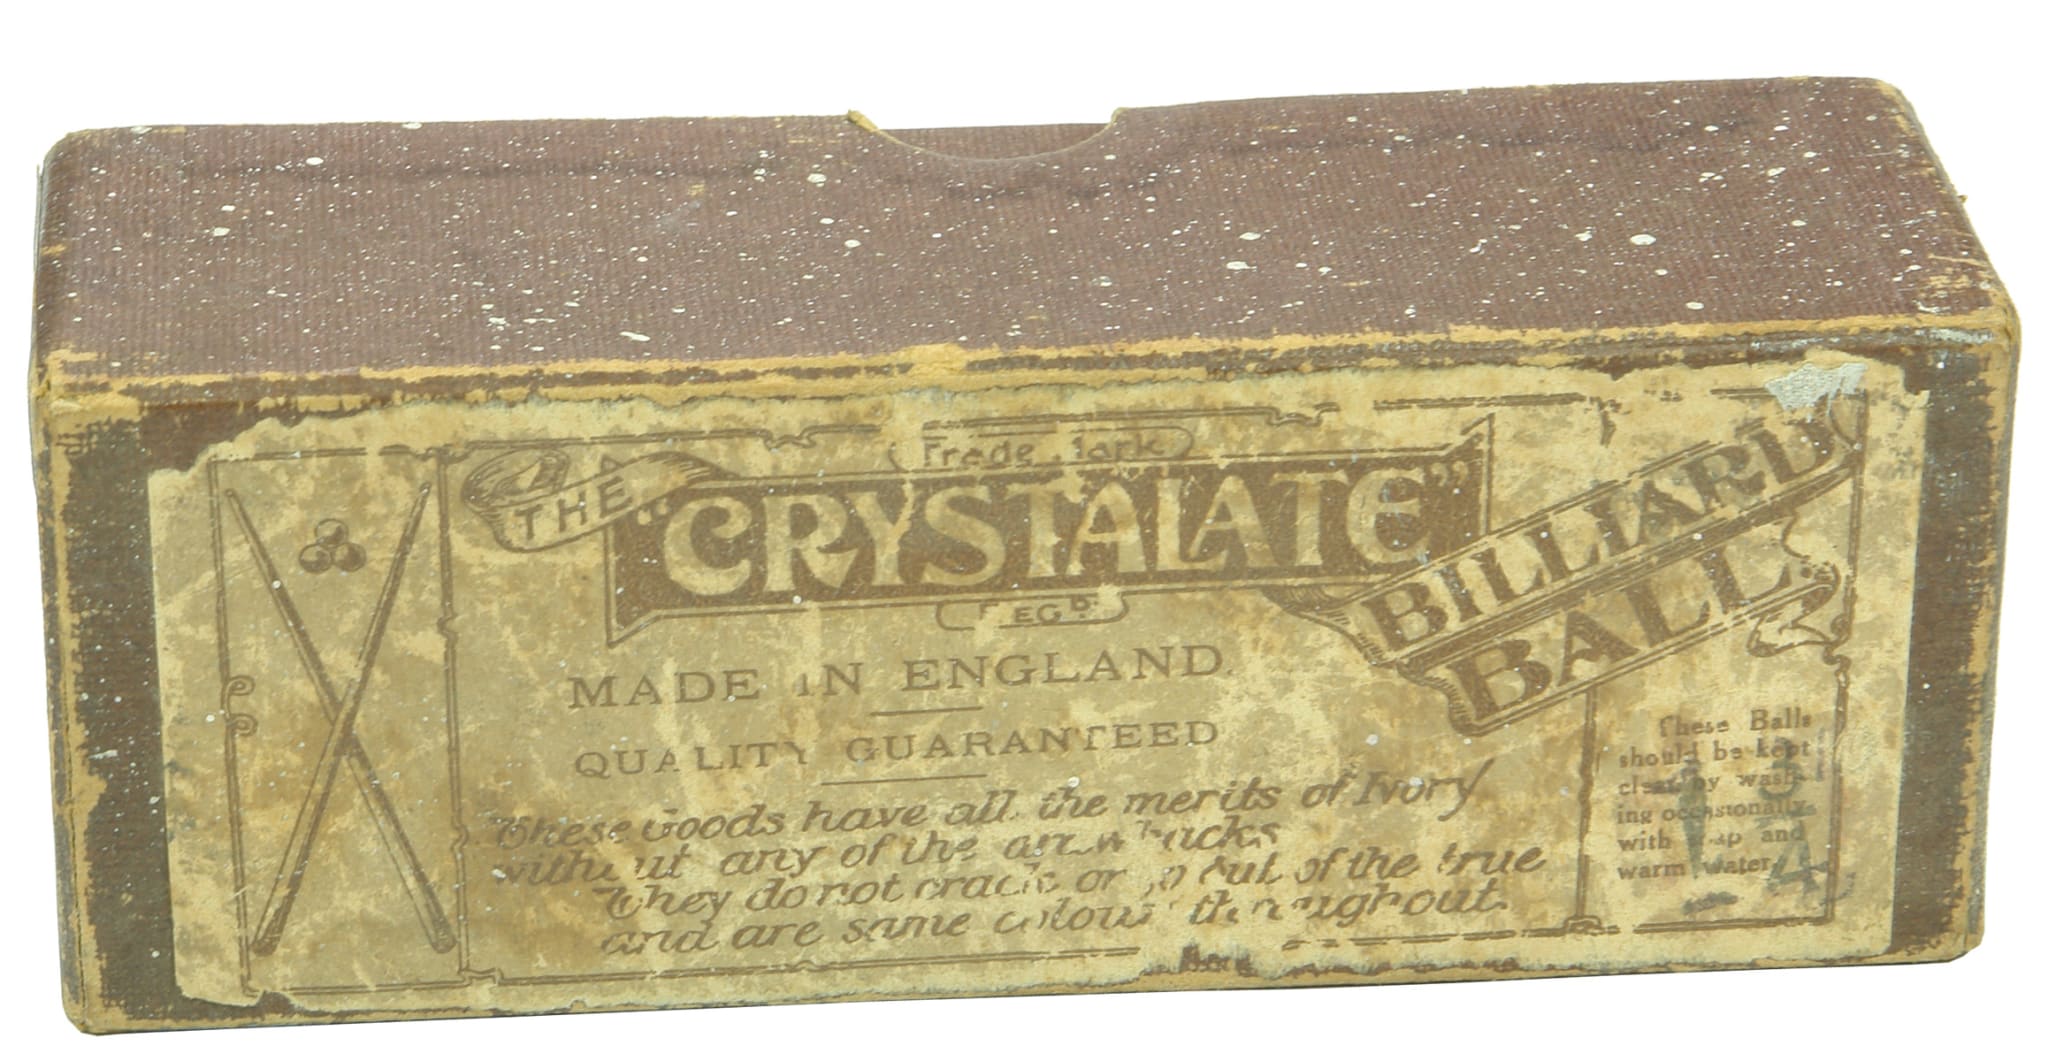 Crystalate Billiard Ball England Cardboard Box